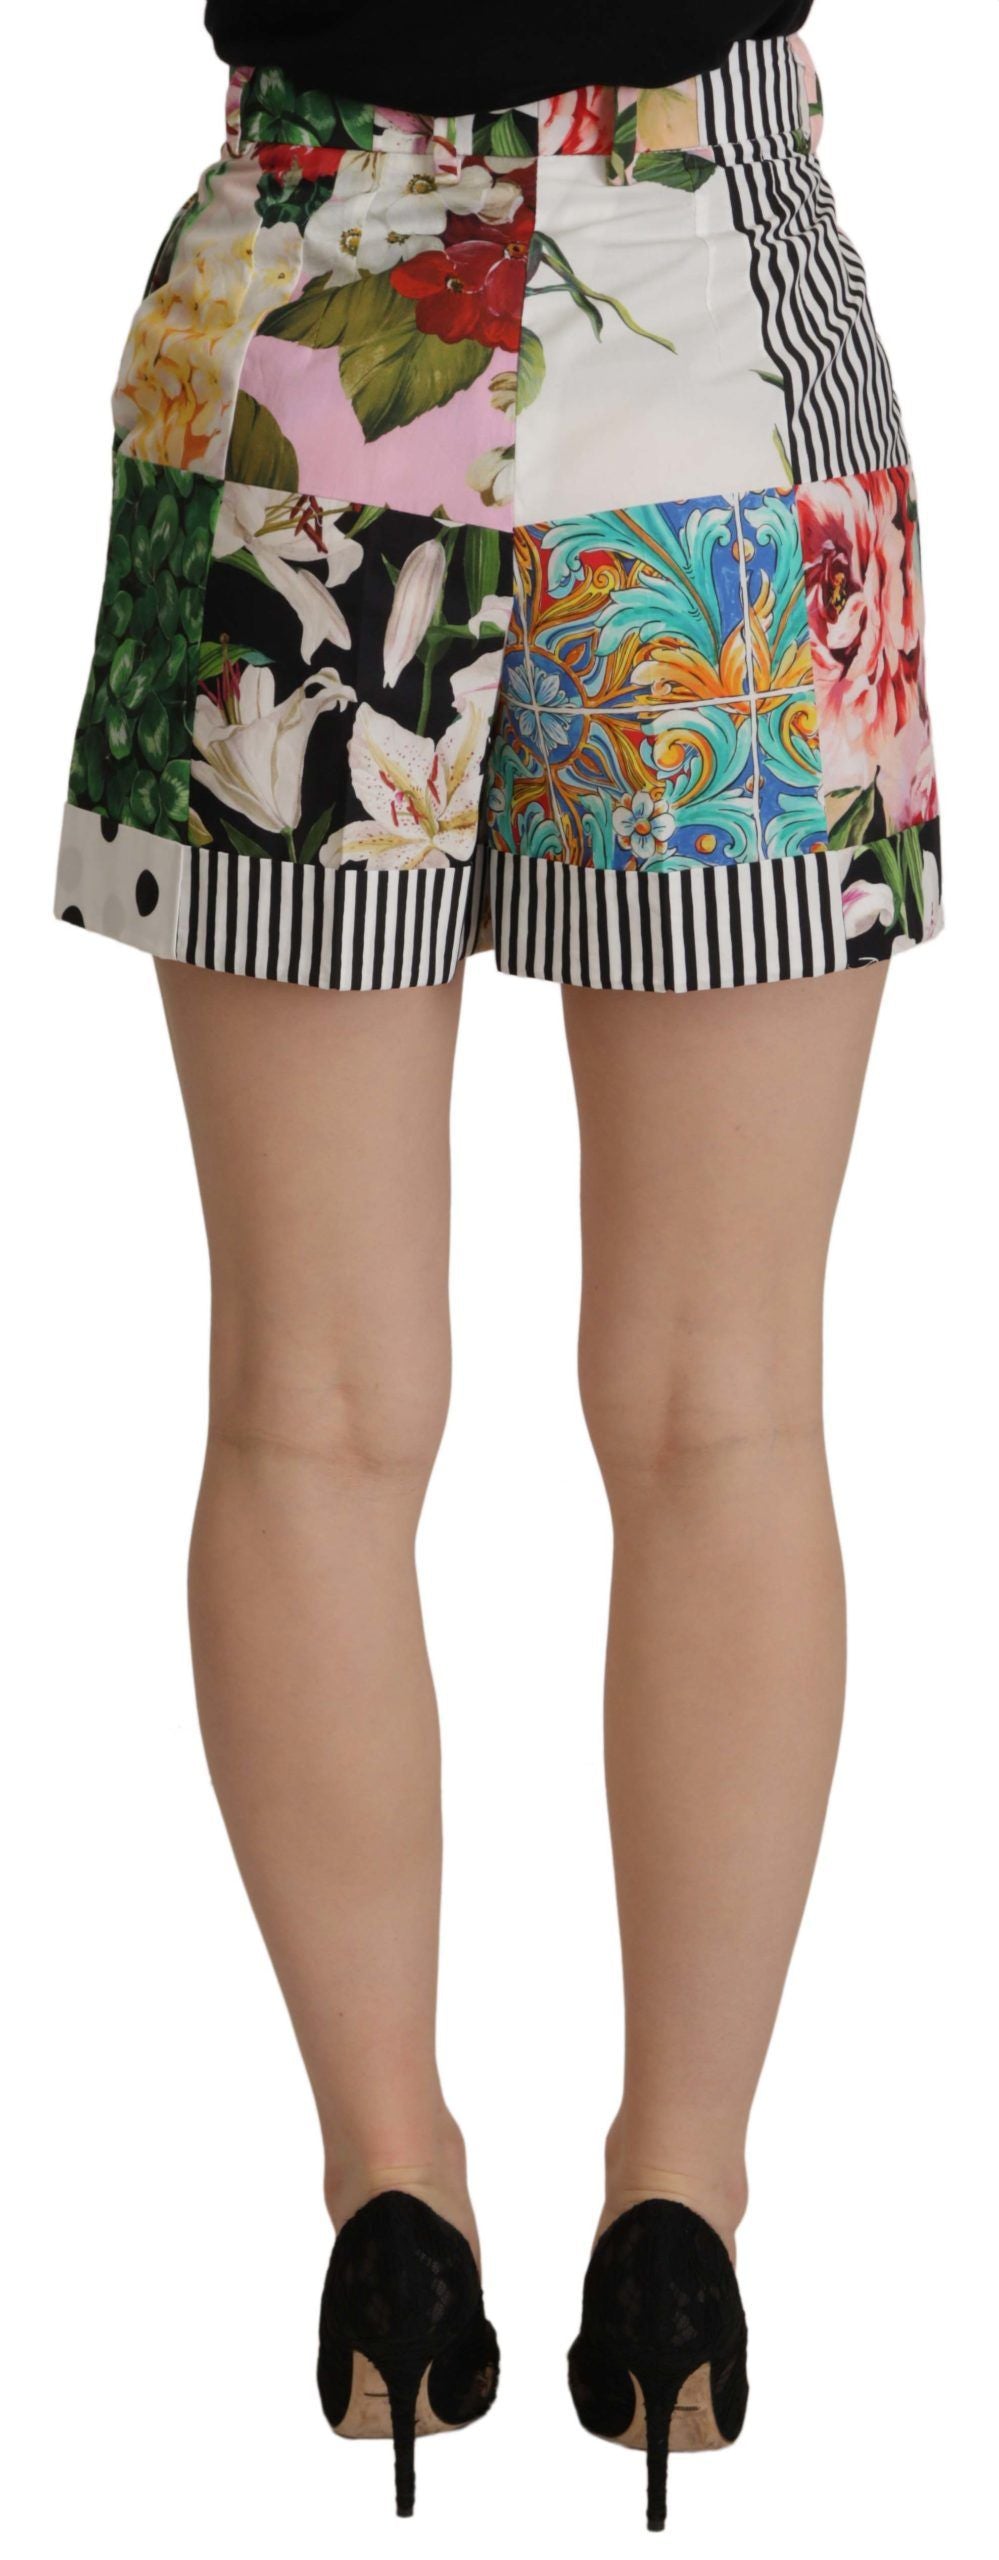 Floral High Waist Hot Pants Shorts